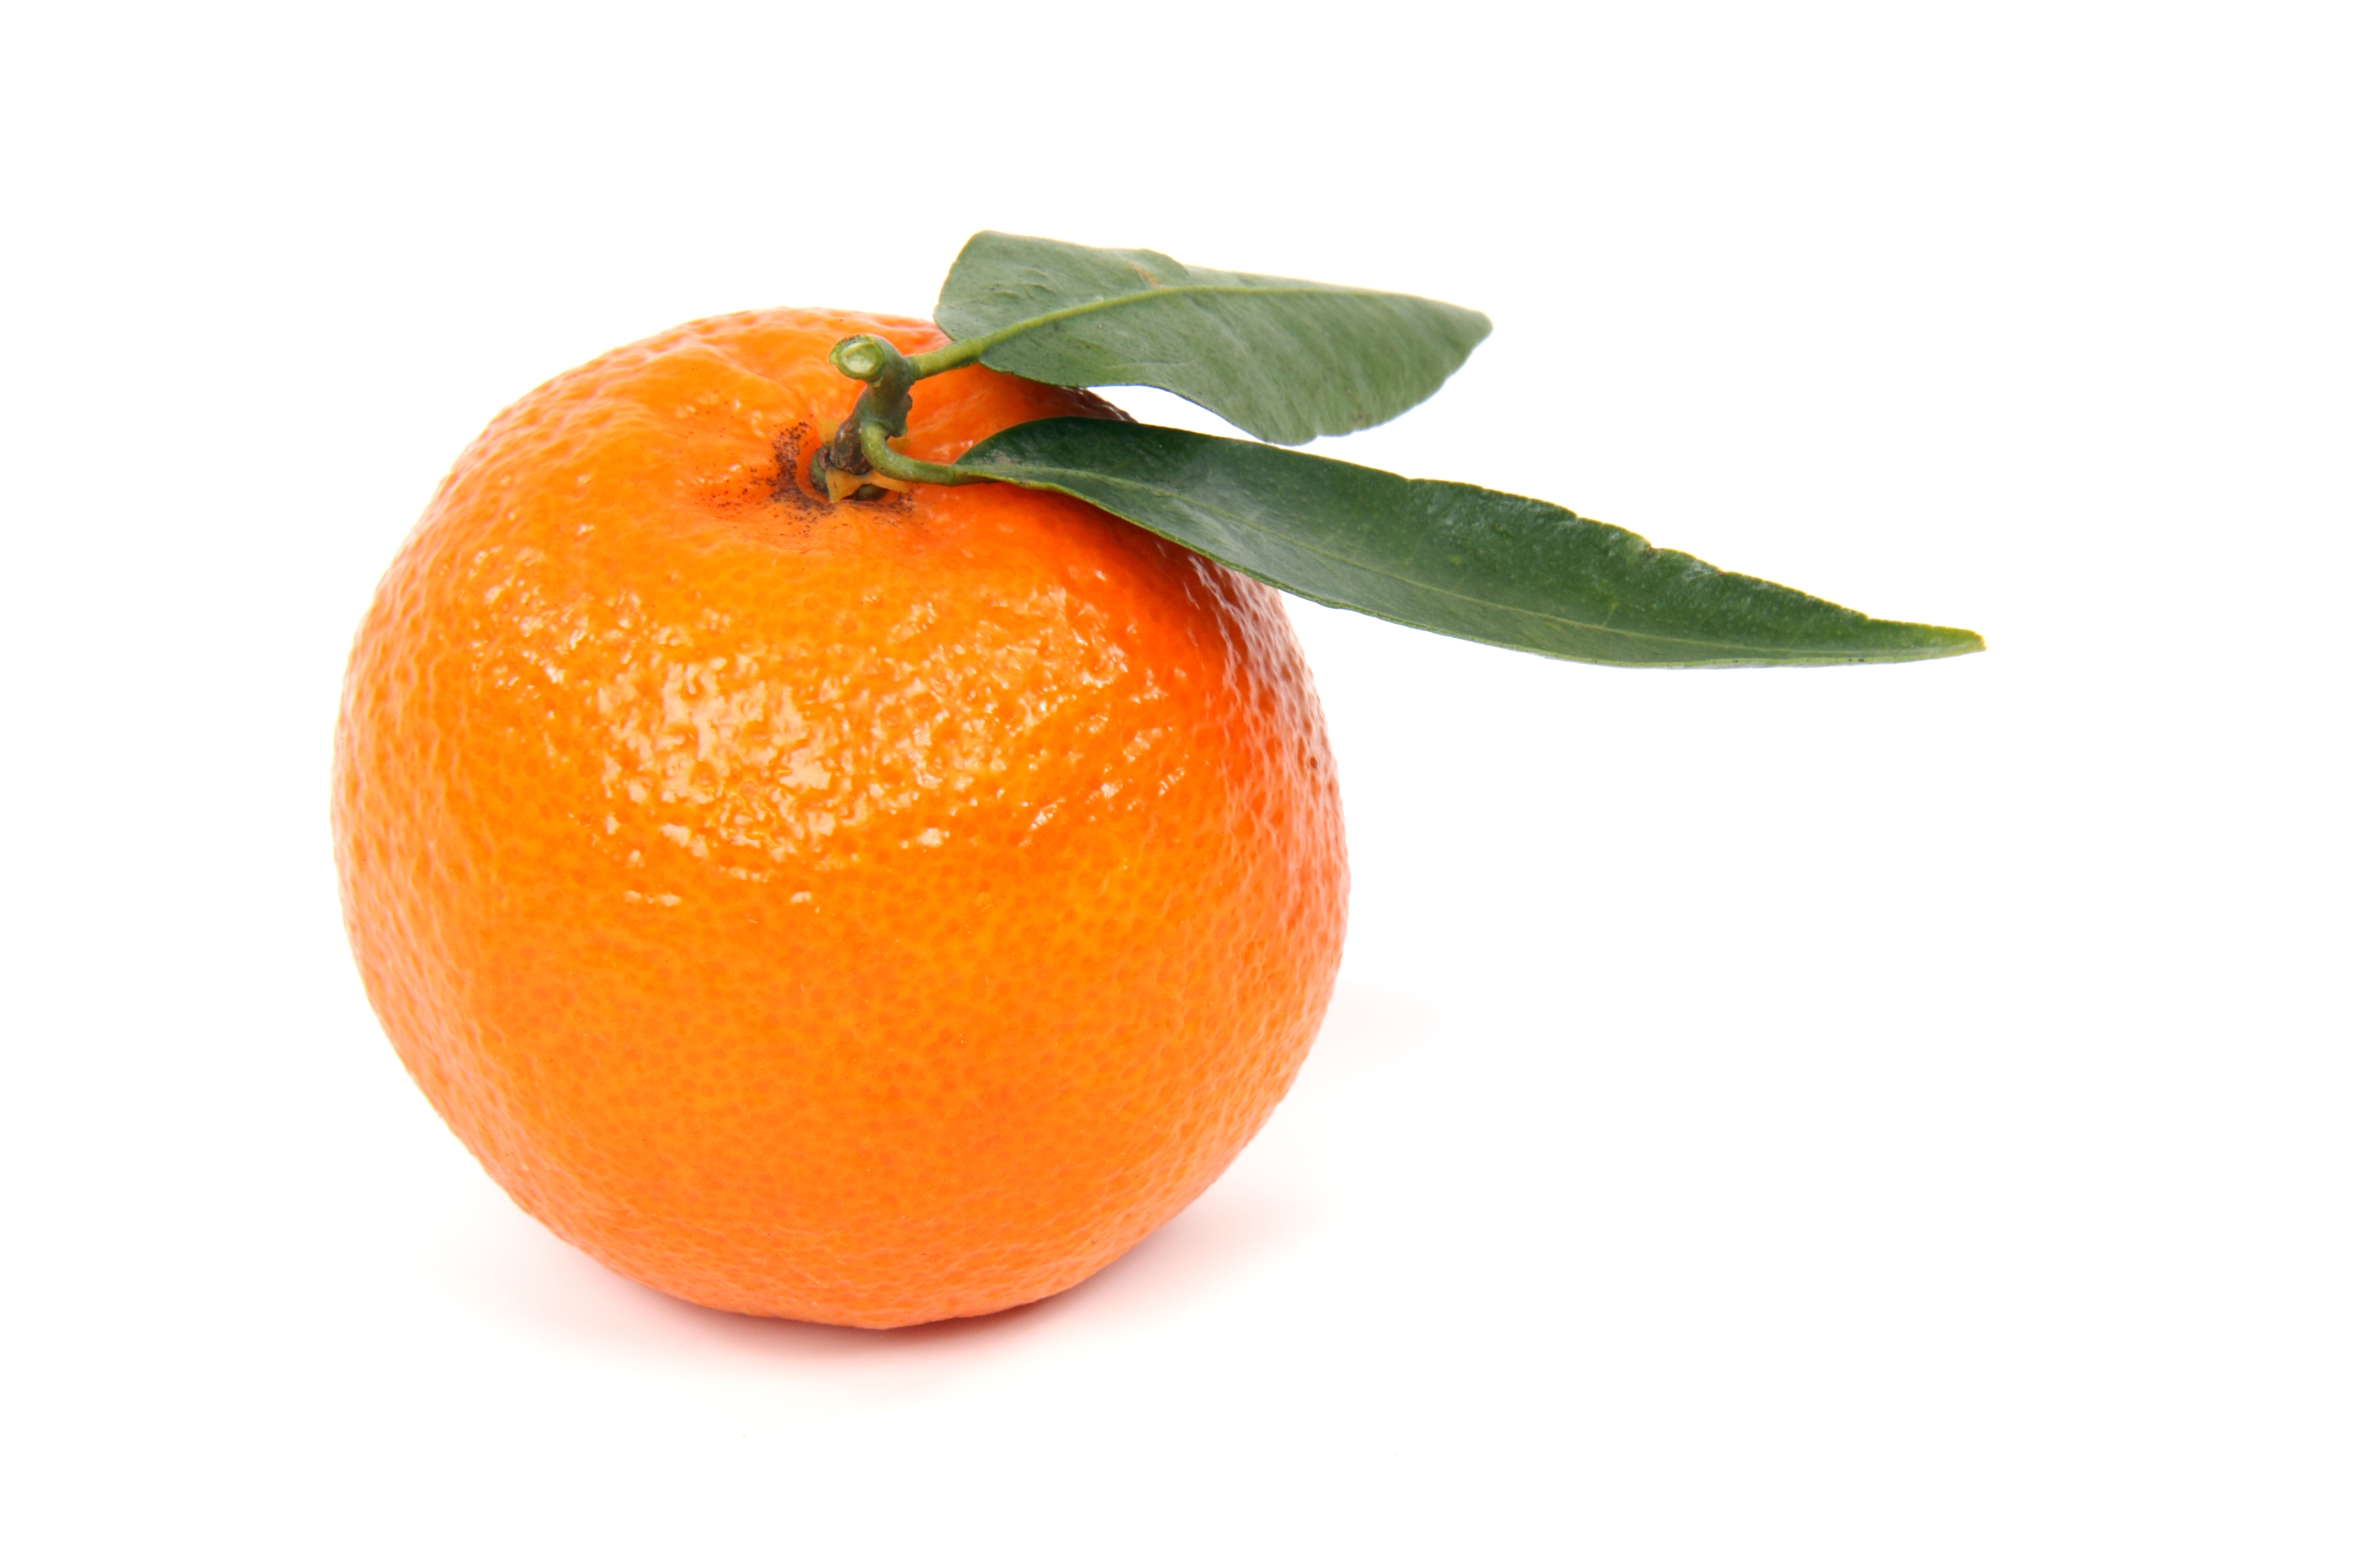 The Clementine - proud member of the mandarine orange family